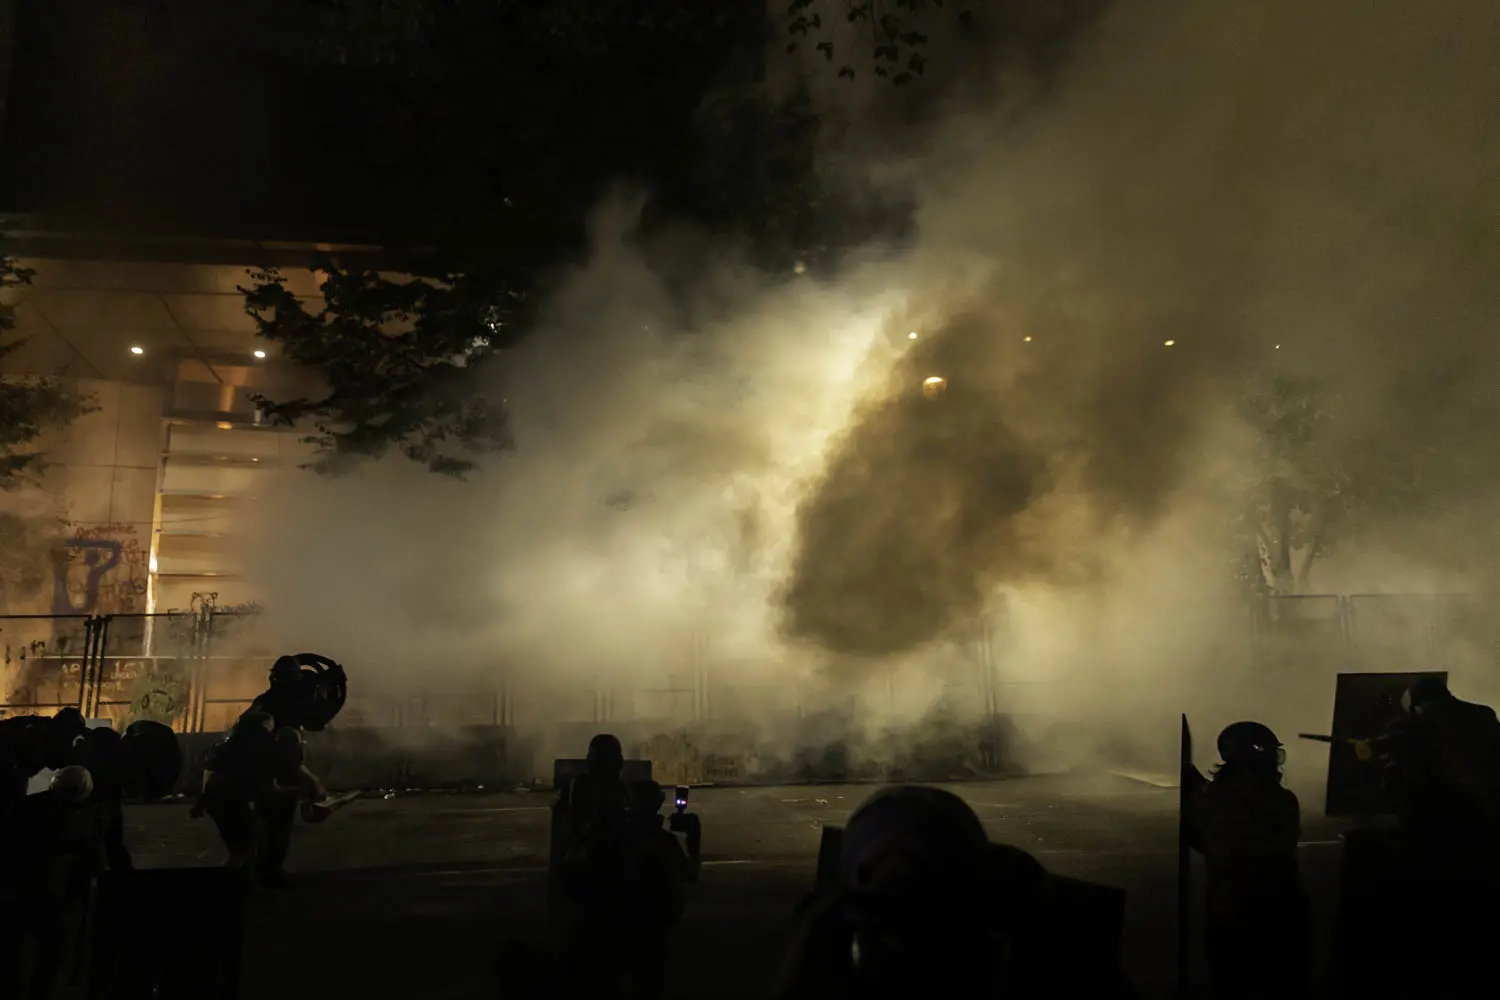 Tear gas fills the night air.